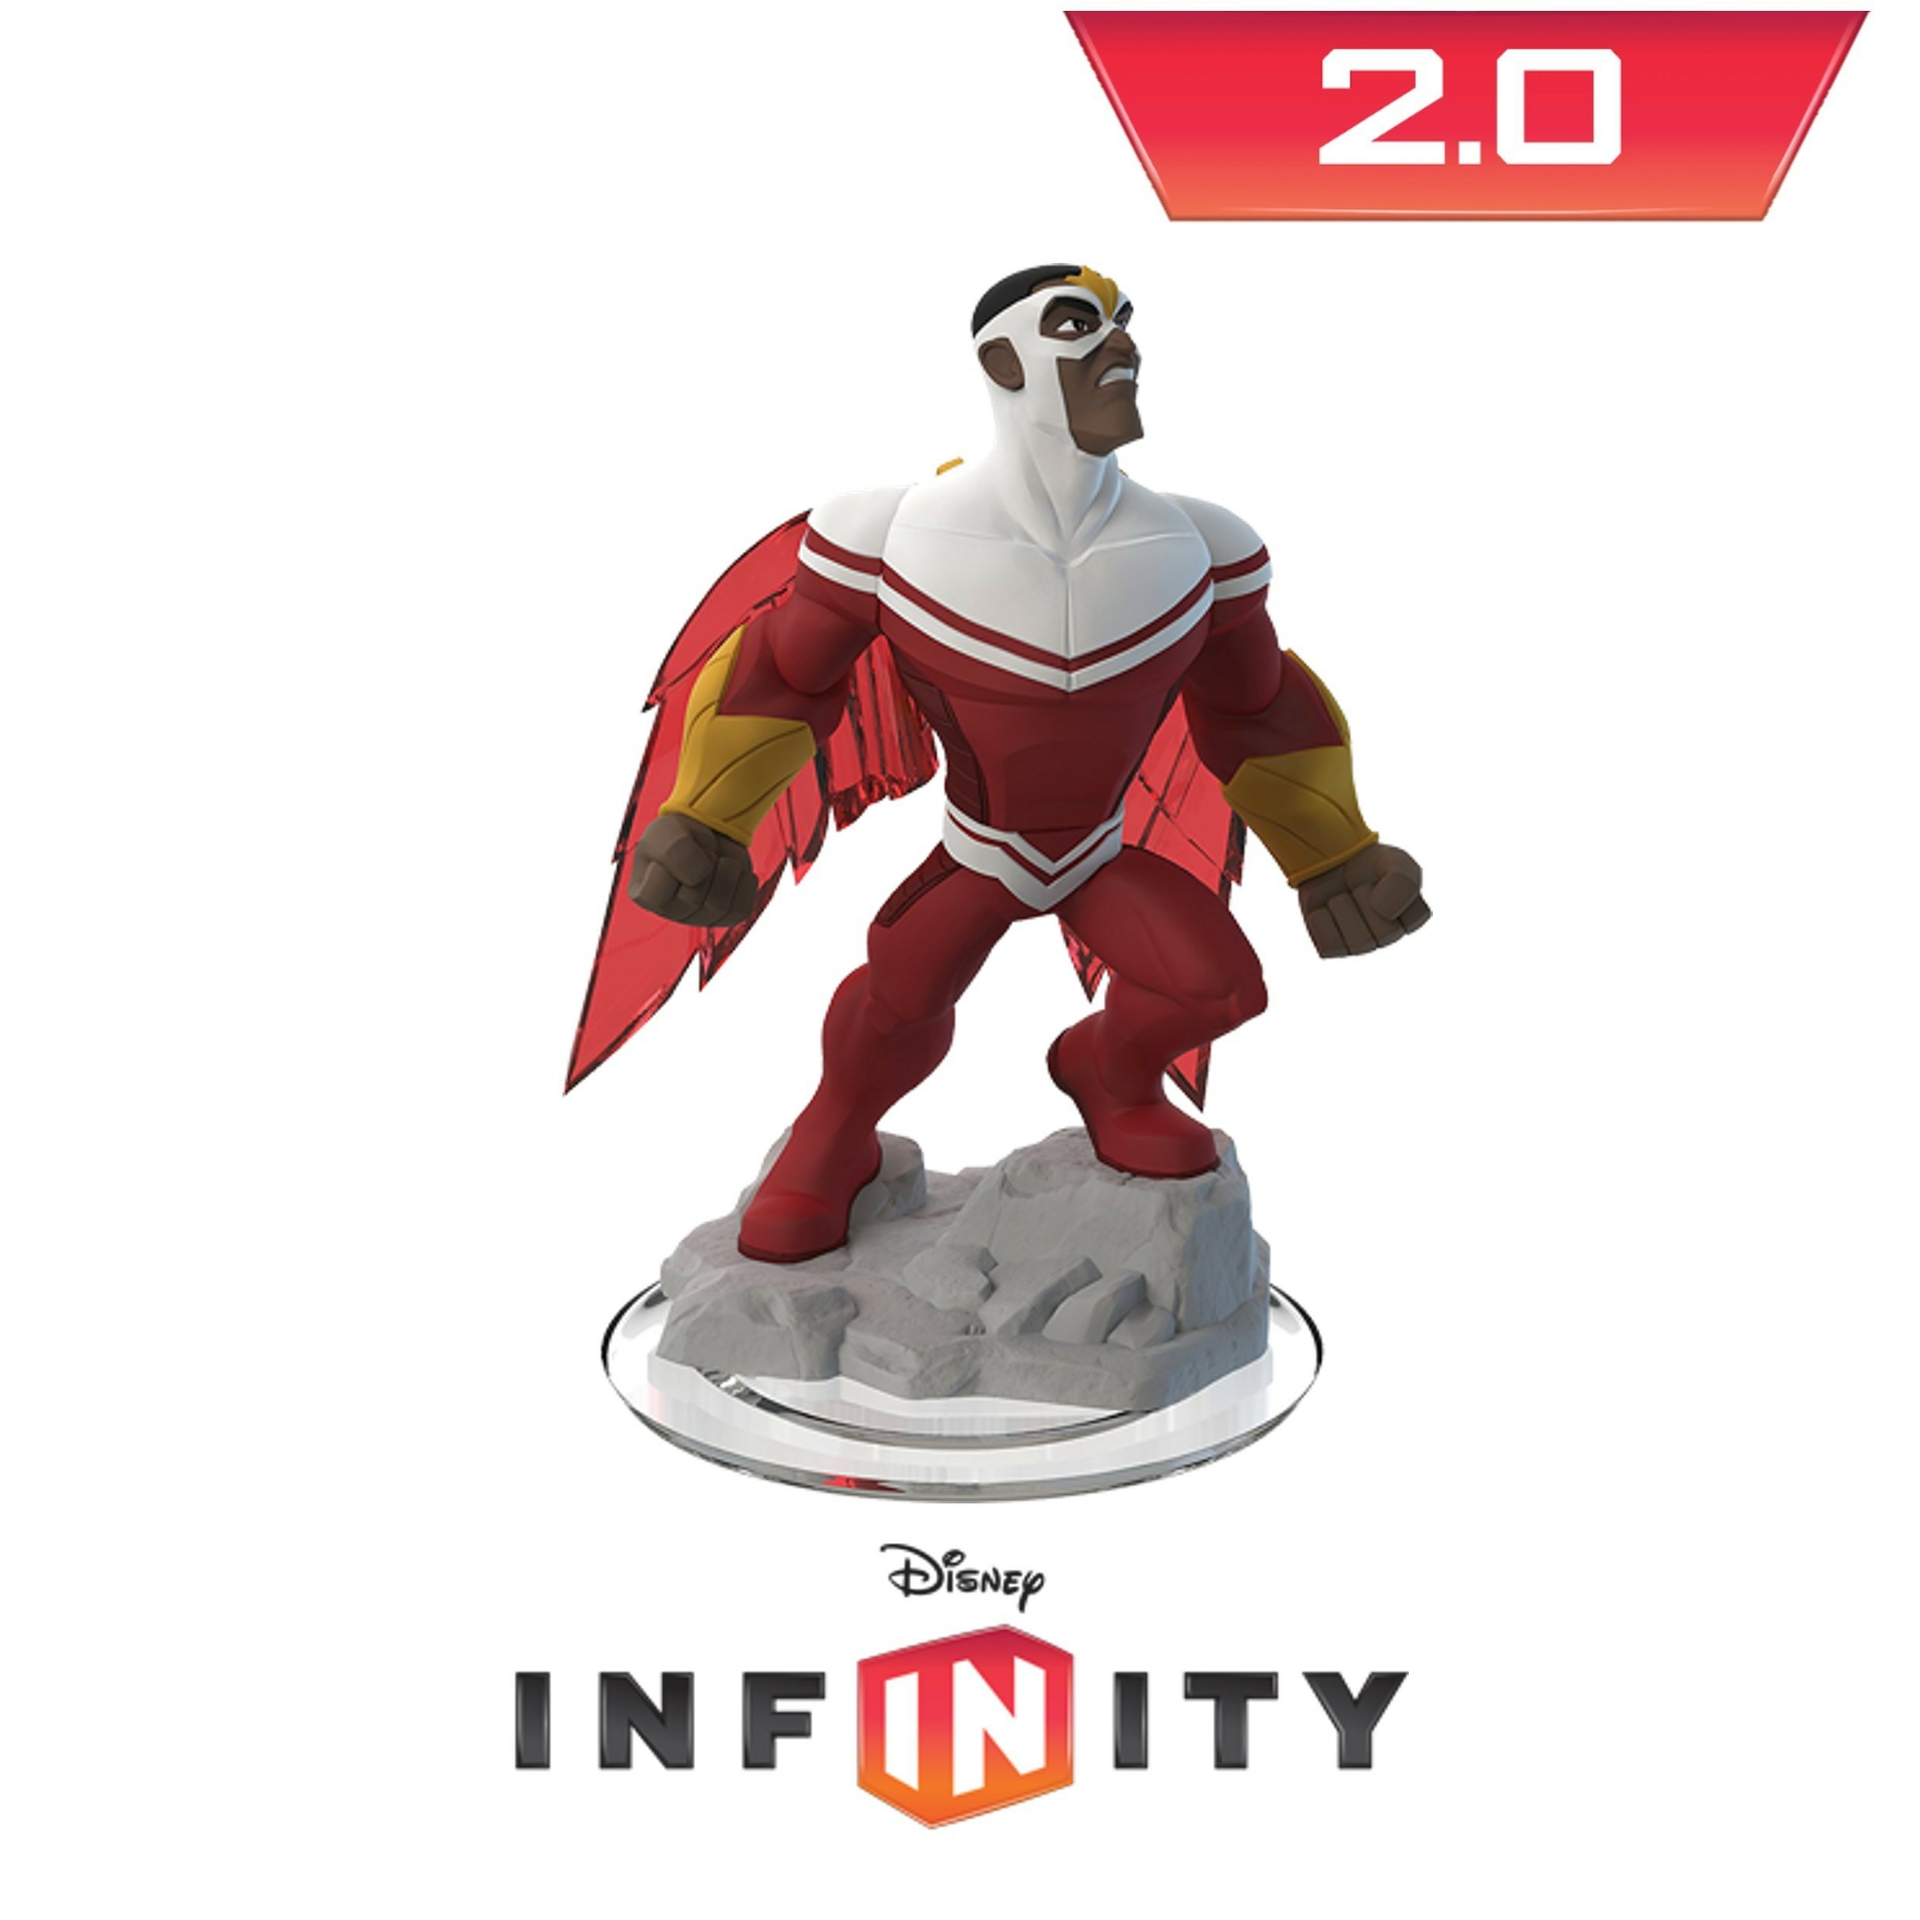 Disney infinity - Falcon - Wii Hardware